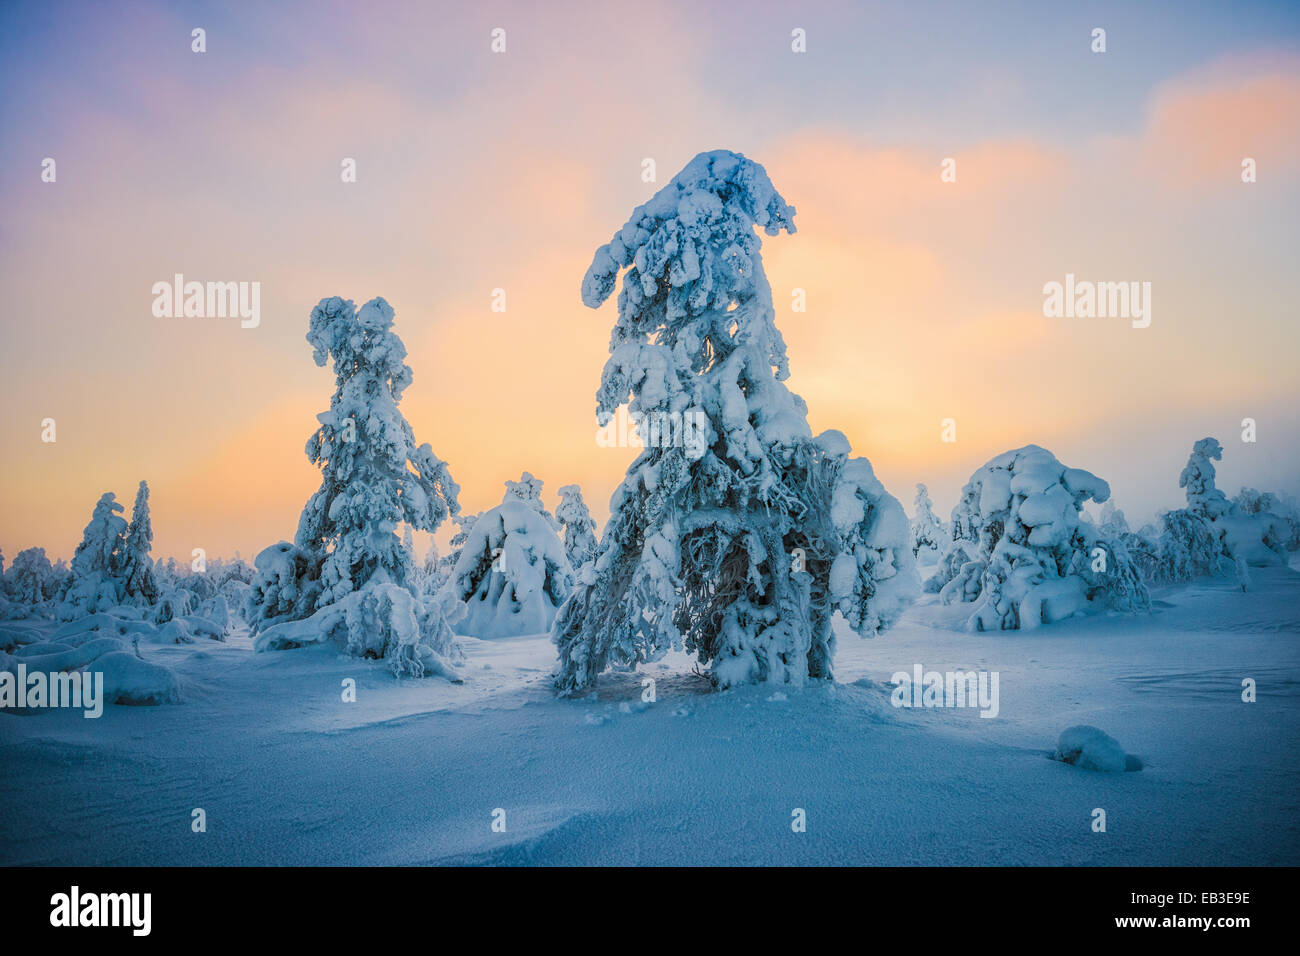 Finland, Lapland, Luosto, Pine trees in winter Stock Photo